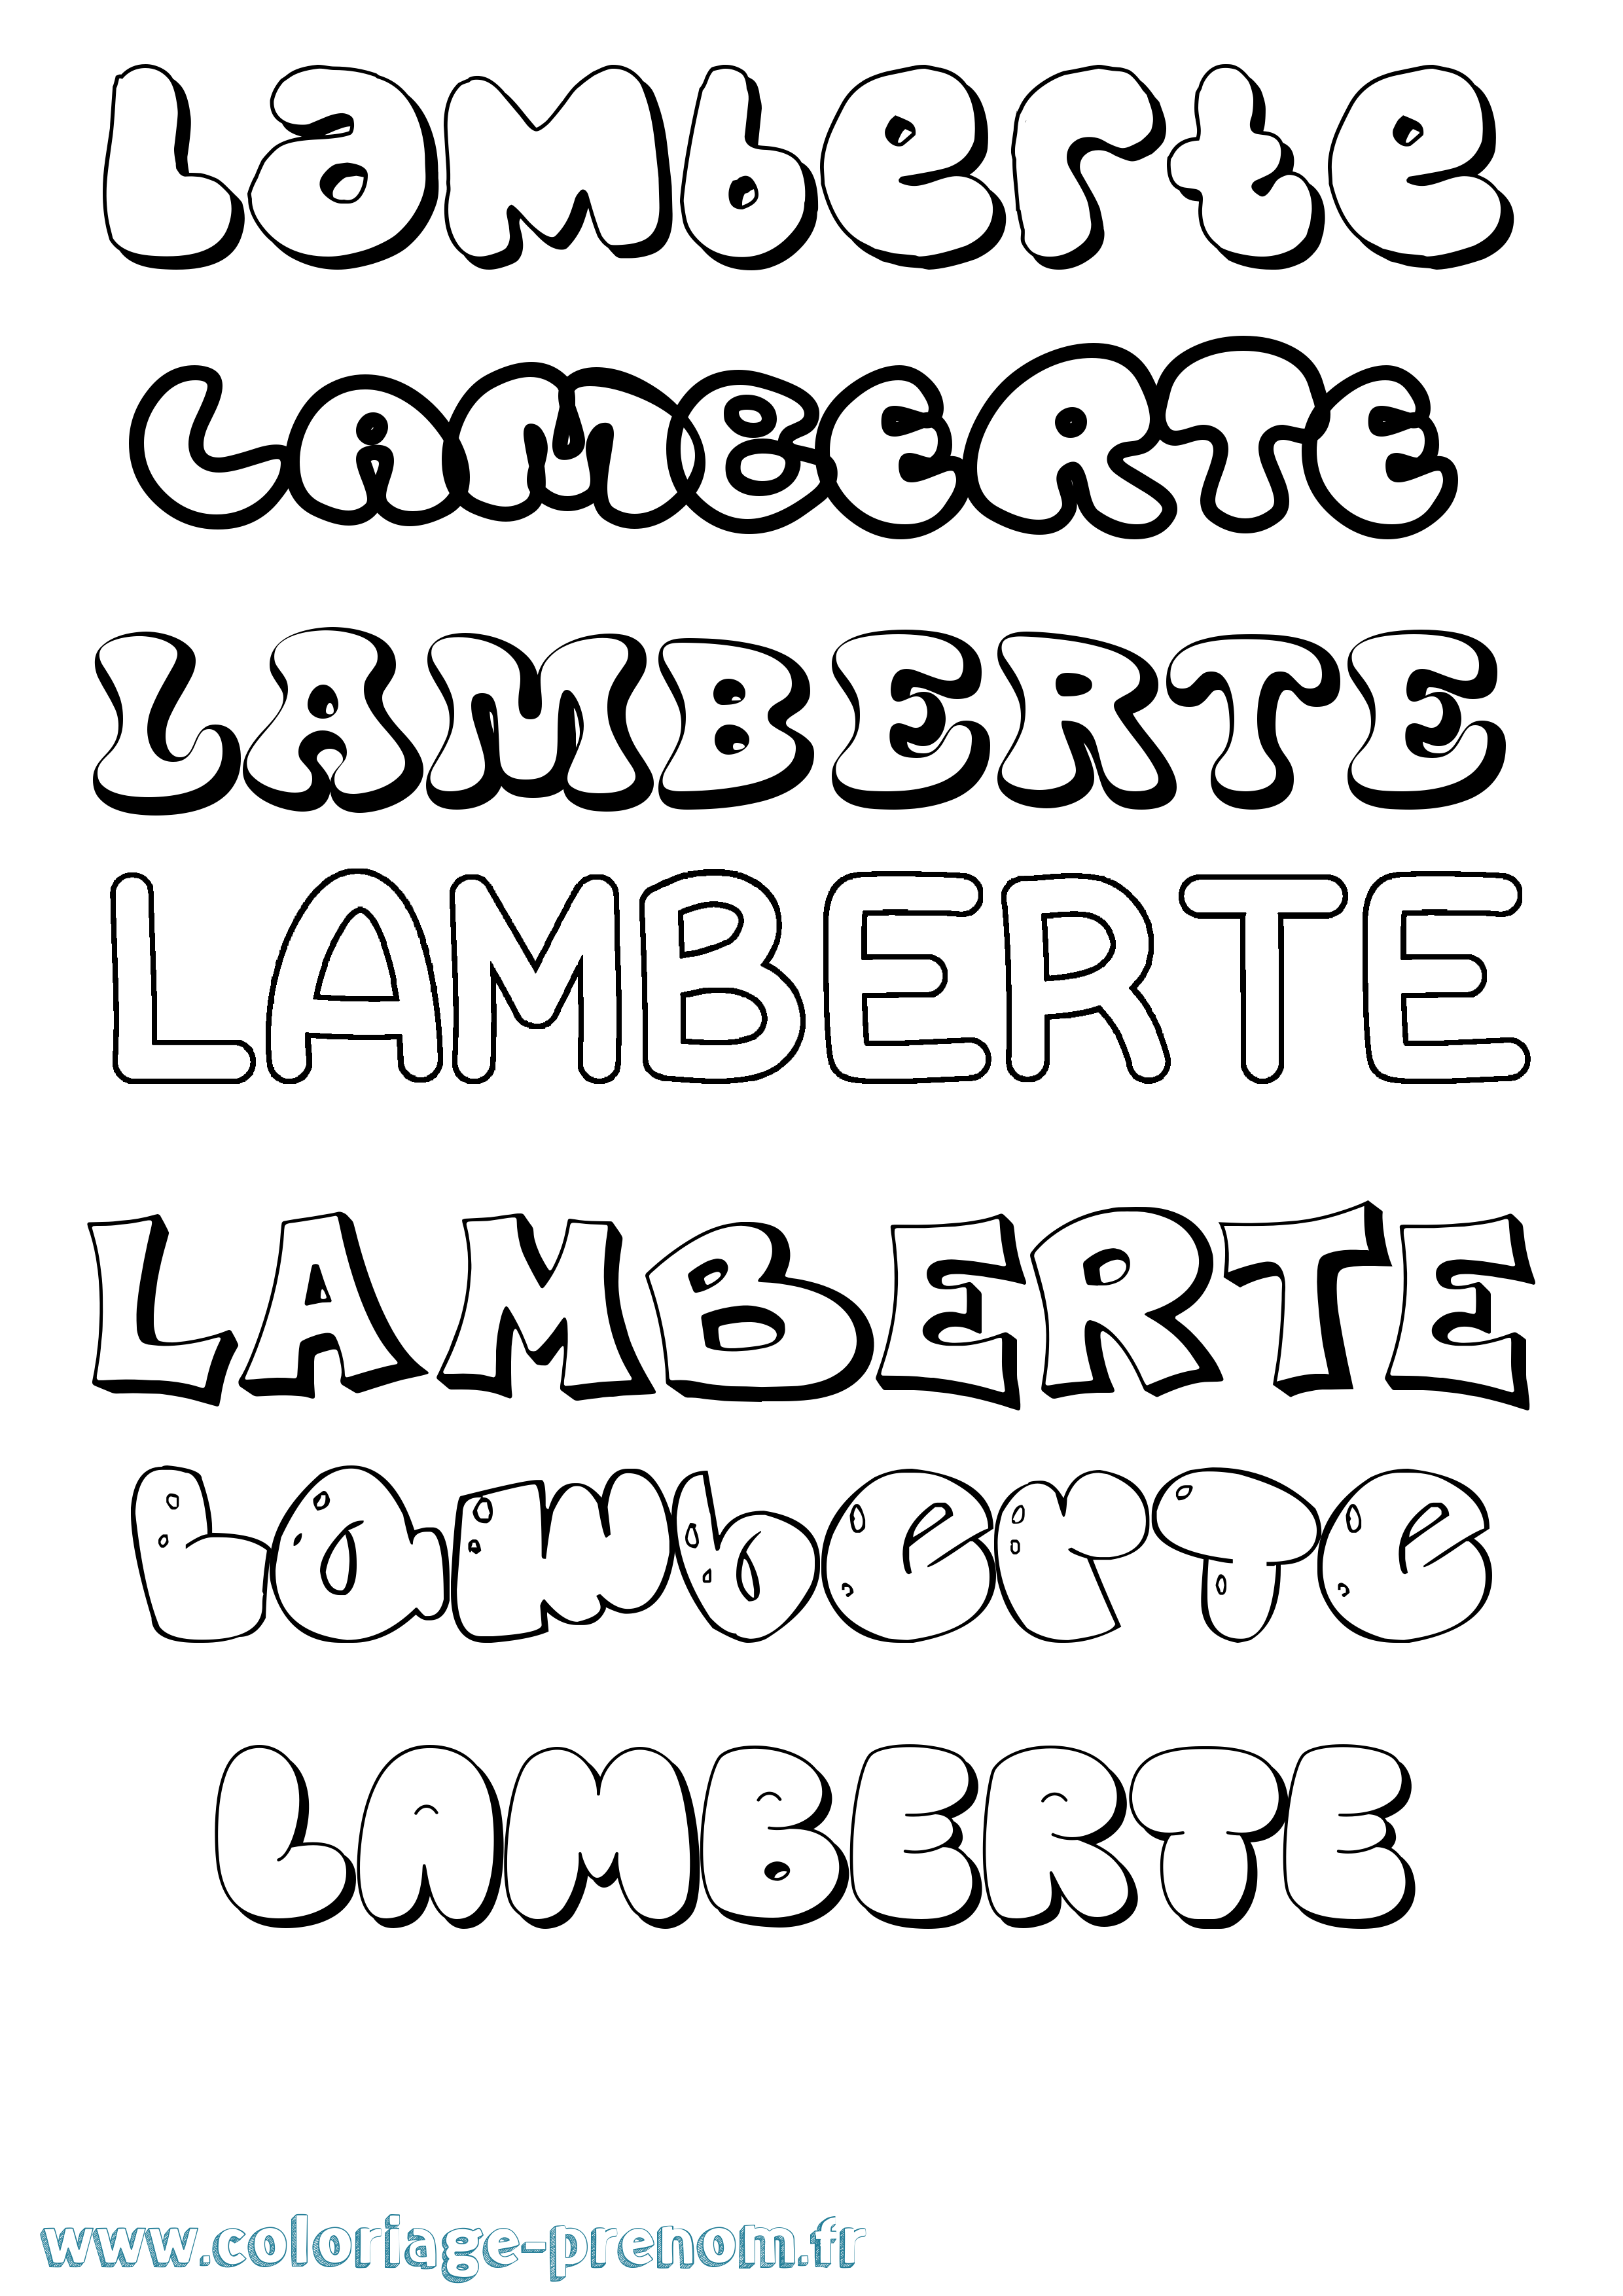 Coloriage prénom Lamberte Bubble